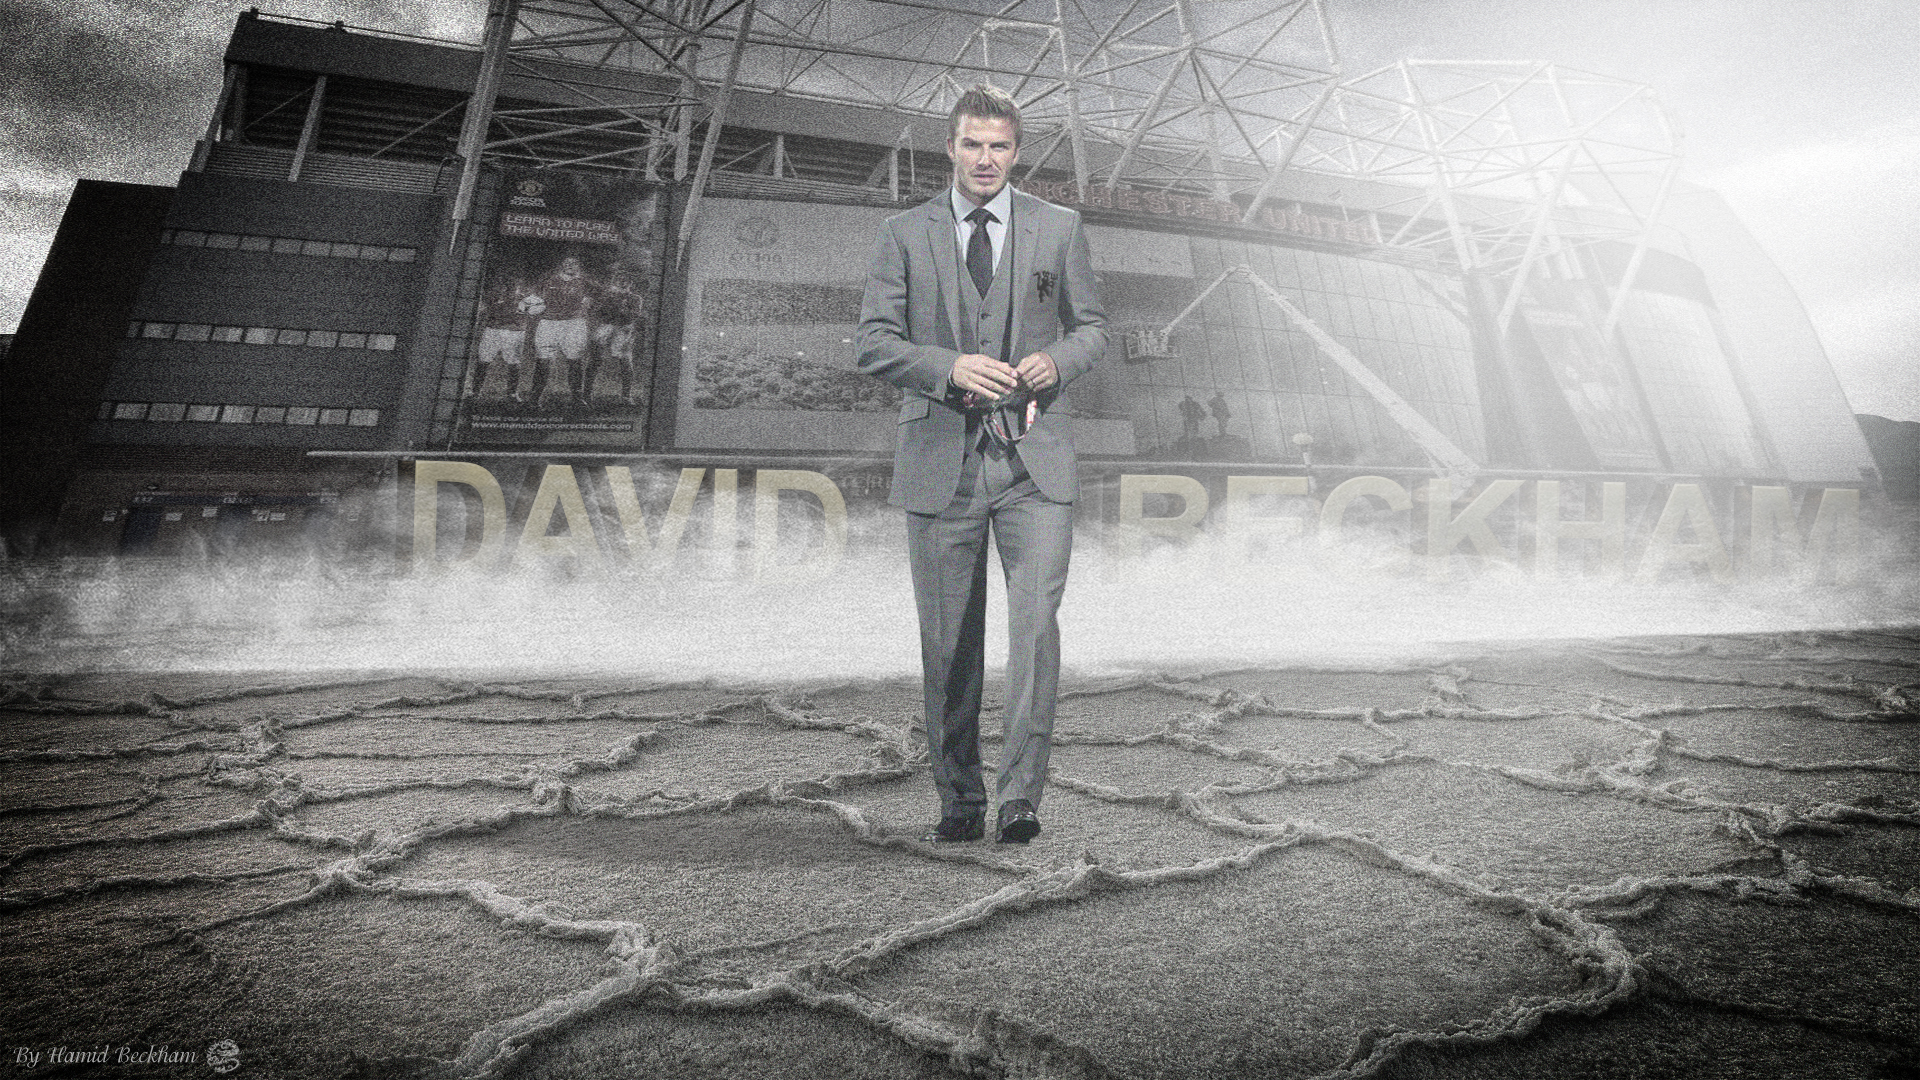 Download mobile wallpaper Sports, David Beckham, Soccer, Manchester United F C for free.